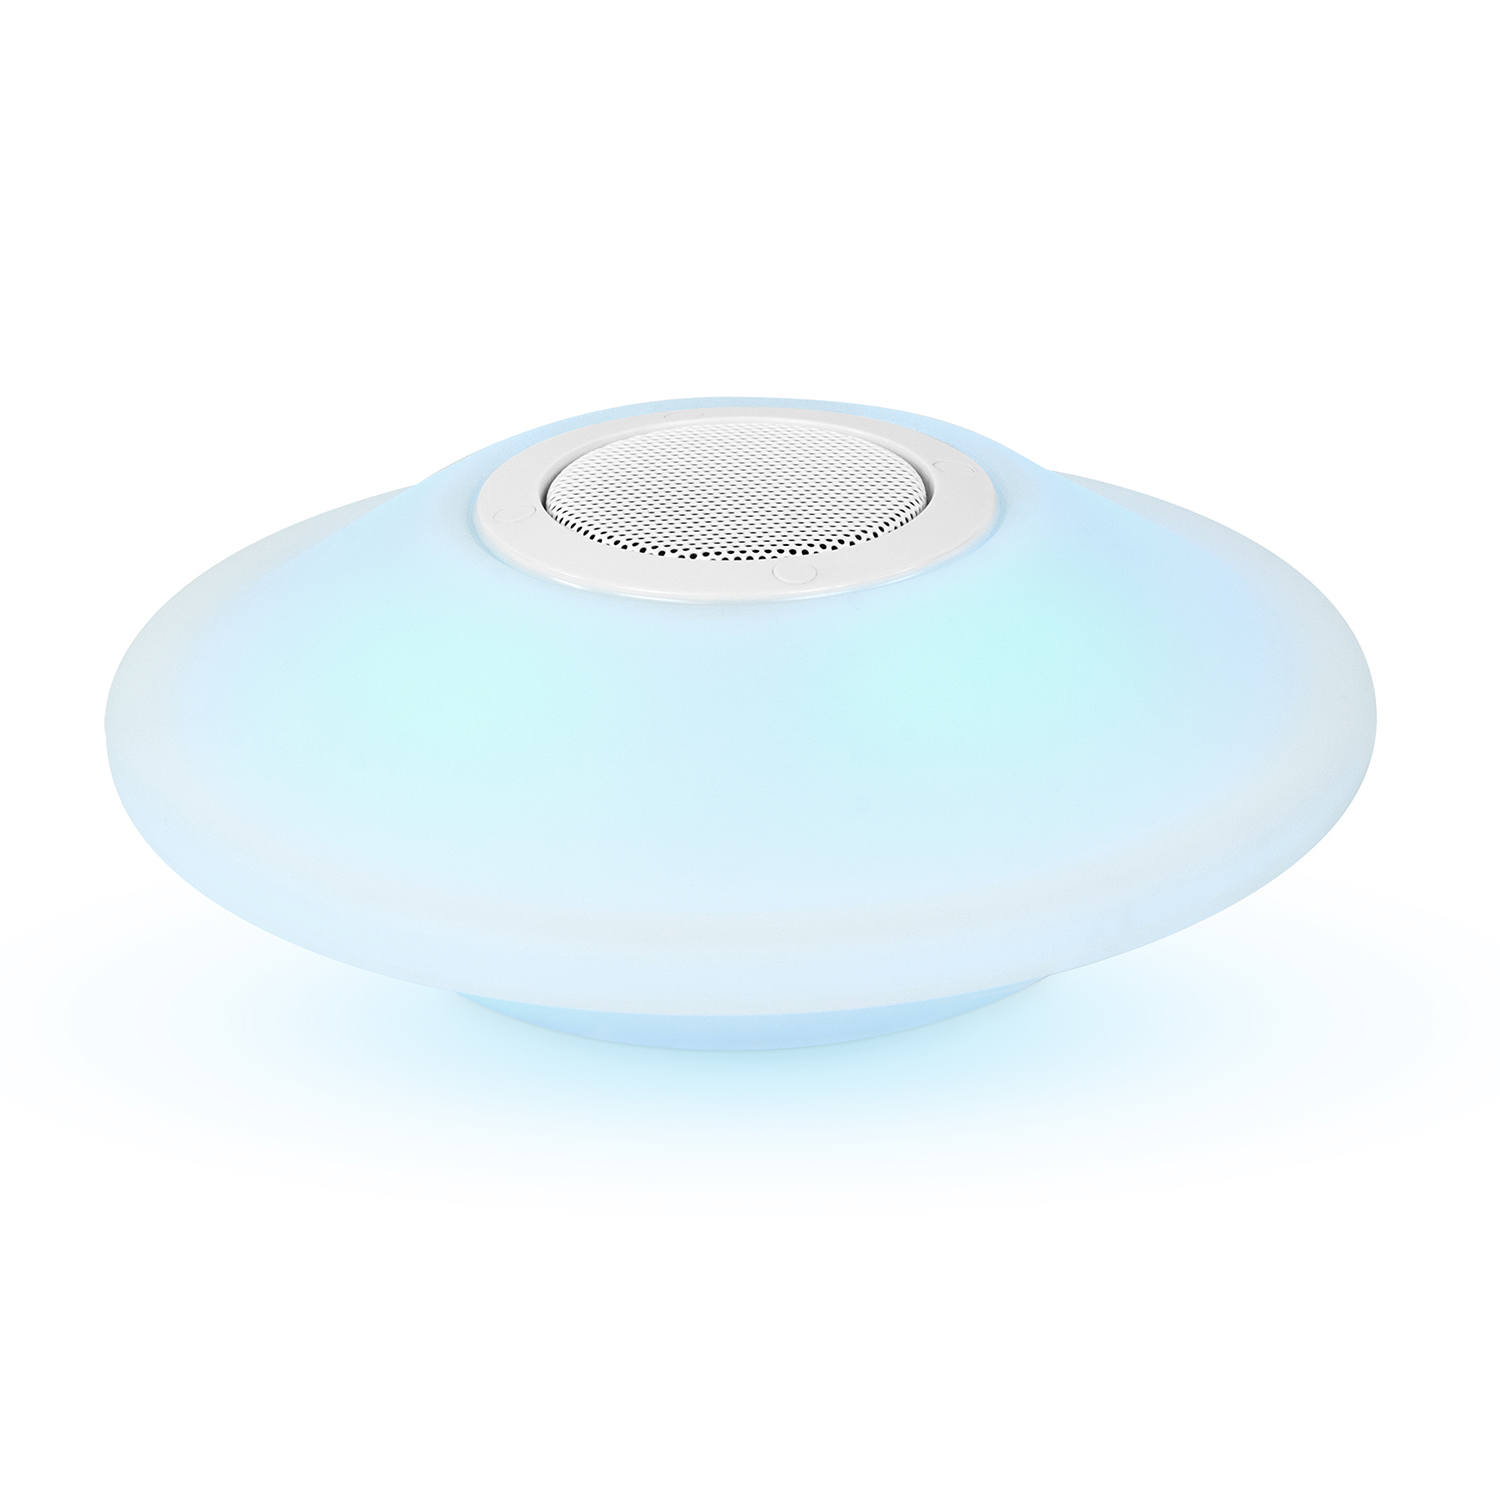 Innovative Technology Glowing Waterproof Rechargeable Bluetooth Pool Speaker - image 1 of 3